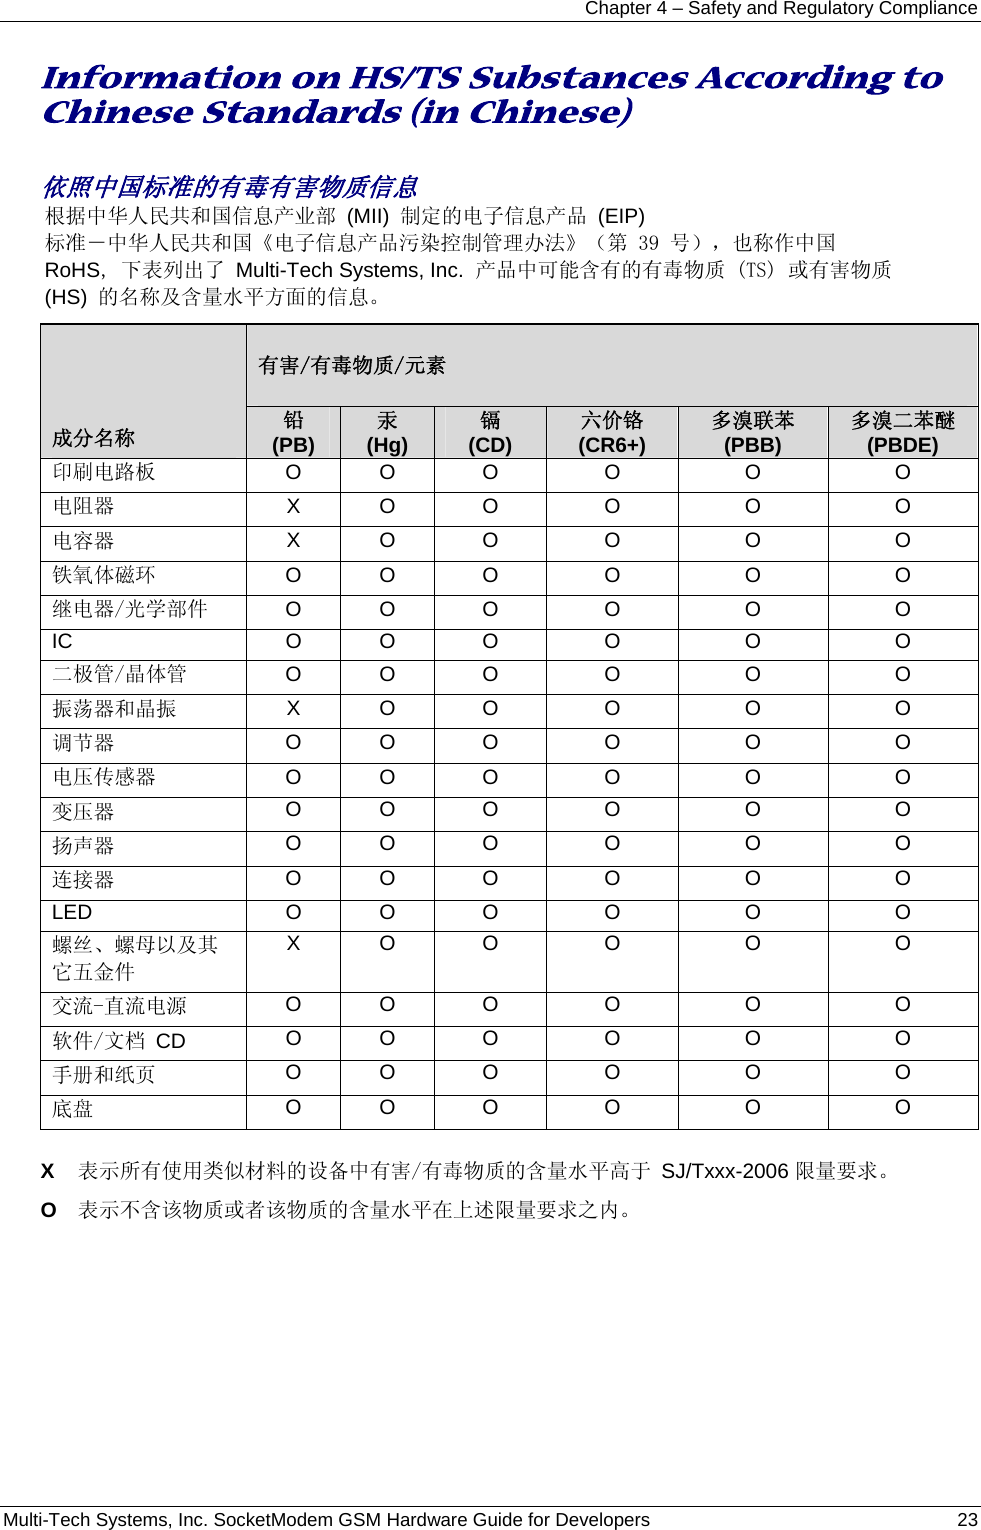 Chapter 4 – Safety and Regulatory Compliance Multi-Tech Systems, Inc. SocketModem GSM Hardware Guide for Developers   23  Information on HS/TS Substances According to Chinese Standards (in Chinese)  依照中国标准的有毒有害物质信息 根据中华人民共和国信息产业部 (MII) 制定的电子信息产品 (EIP) 标准－中华人民共和国《电子信息产品污染控制管理办法》（第 39 号），也称作中国 RoHS，下表列出了 Multi-Tech Systems, Inc.  产品中可能含有的有毒物质 (TS) 或有害物质 (HS) 的名称及含量水平方面的信息。              有害/有毒物质/元素            成分名称 铅 (PB) 汞  (Hg) 镉 (CD) 六价铬 (CR6+) 多溴联苯 (PBB) 多溴二苯醚 (PBDE) 印刷电路板  O O  O  O  O  O 电阻器  X O  O  O  O  O 电容器 X O  O  O  O  O 铁氧体磁环  O O  O  O  O  O 继电器/光学部件  O O  O  O  O  O IC O O O O O O 二极管/晶体管  O O  O  O  O  O 振荡器和晶振  X O  O  O  O  O 调节器  O O  O  O  O  O 电压传感器  O O  O  O  O  O 变压器  O O  O  O  O  O 扬声器  O O  O  O  O  O 连接器  O O  O  O  O  O LED O O O O O O 螺丝、螺母以及其它五金件 X O  O  O  O  O 交流-直流电源  O O  O  O  O  O 软件/文档 CD O O  O  O  O  O 手册和纸页 O O  O  O  O  O 底盘  O O  O  O  O  O  X 表示所有使用类似材料的设备中有害/有毒物质的含量水平高于 SJ/Txxx-2006 限量要求。 O 表示不含该物质或者该物质的含量水平在上述限量要求之内。      